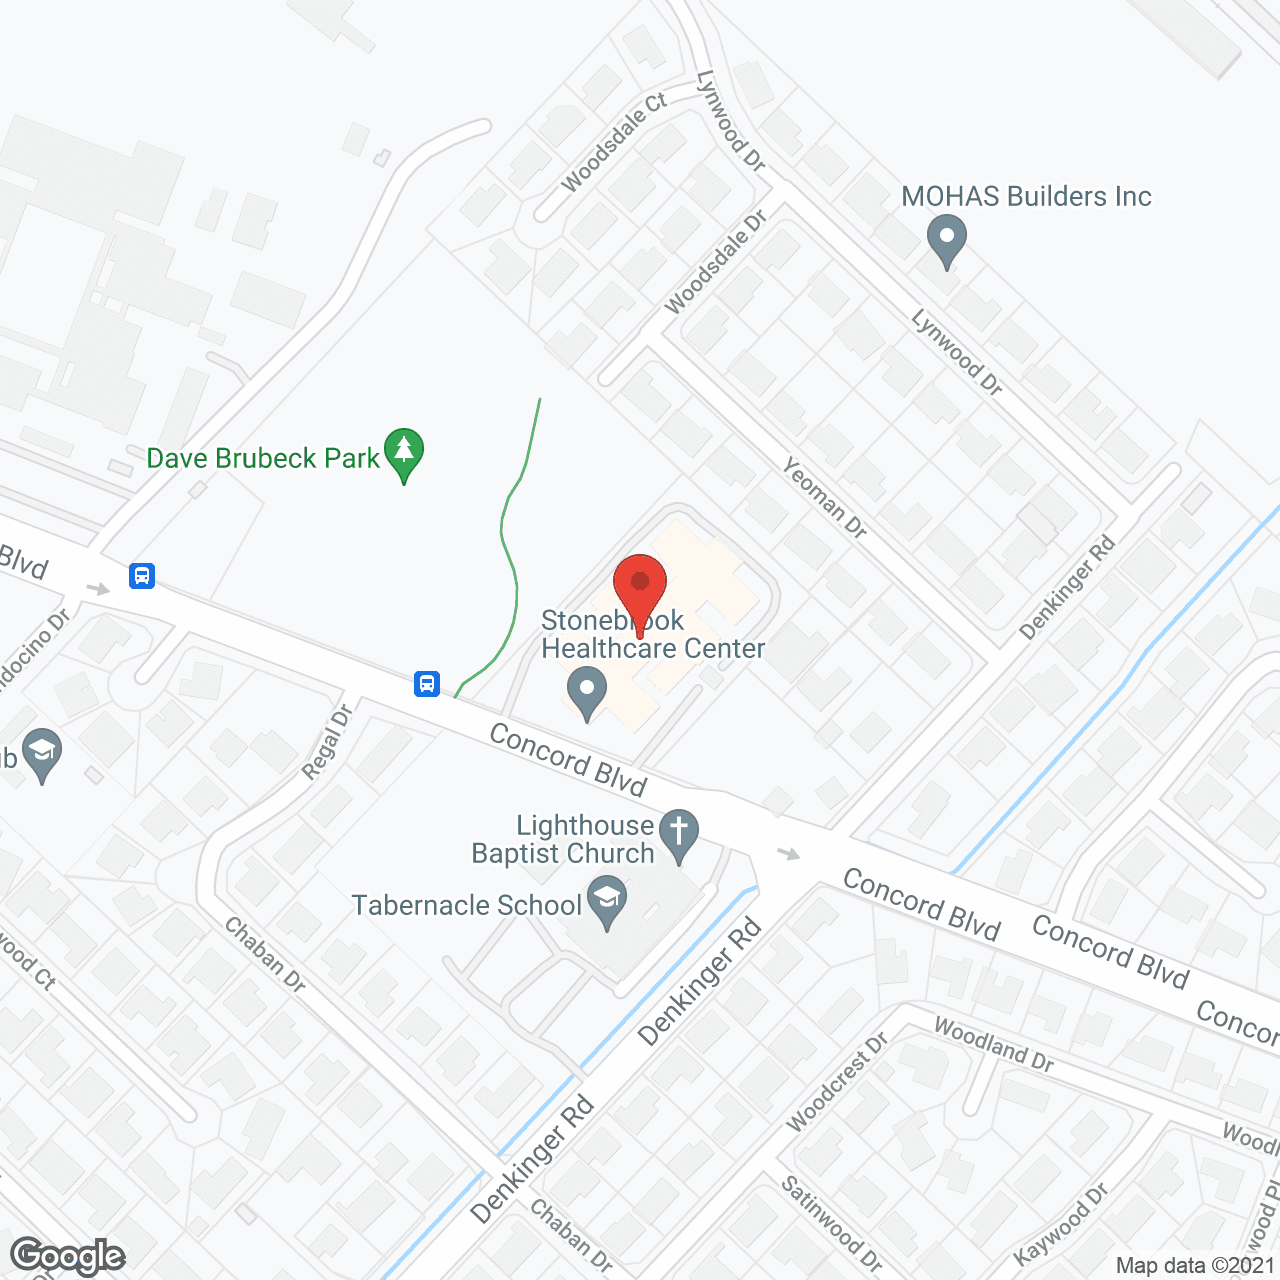 Stonebrook Healthcare Center in google map